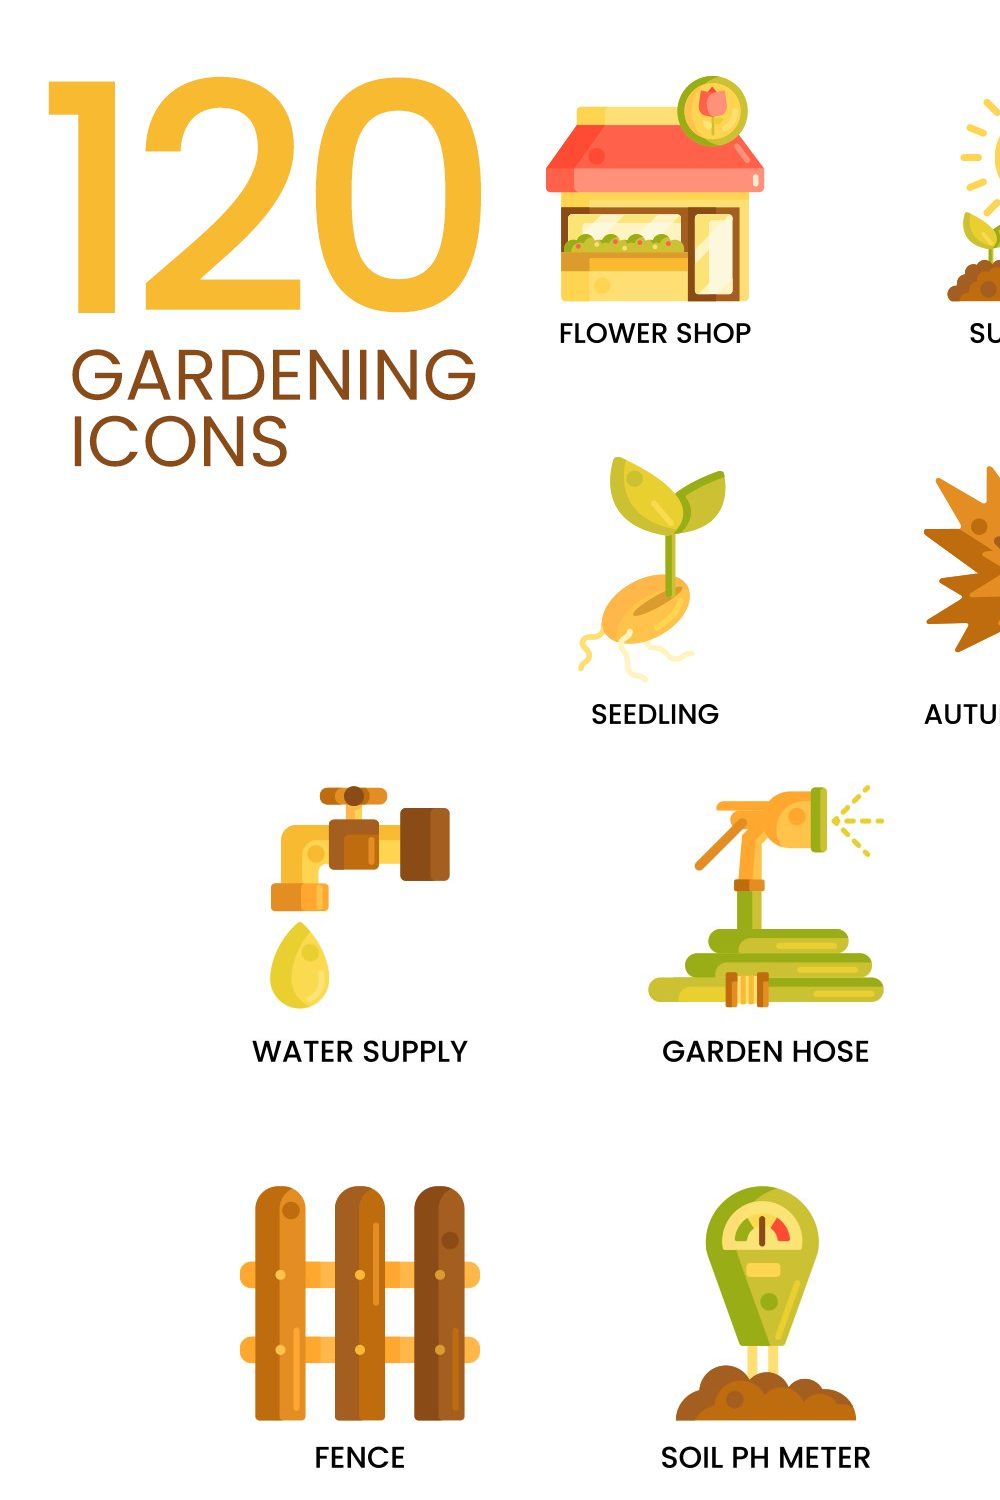 120 Gardening Icons | Caramel pinterest preview image.